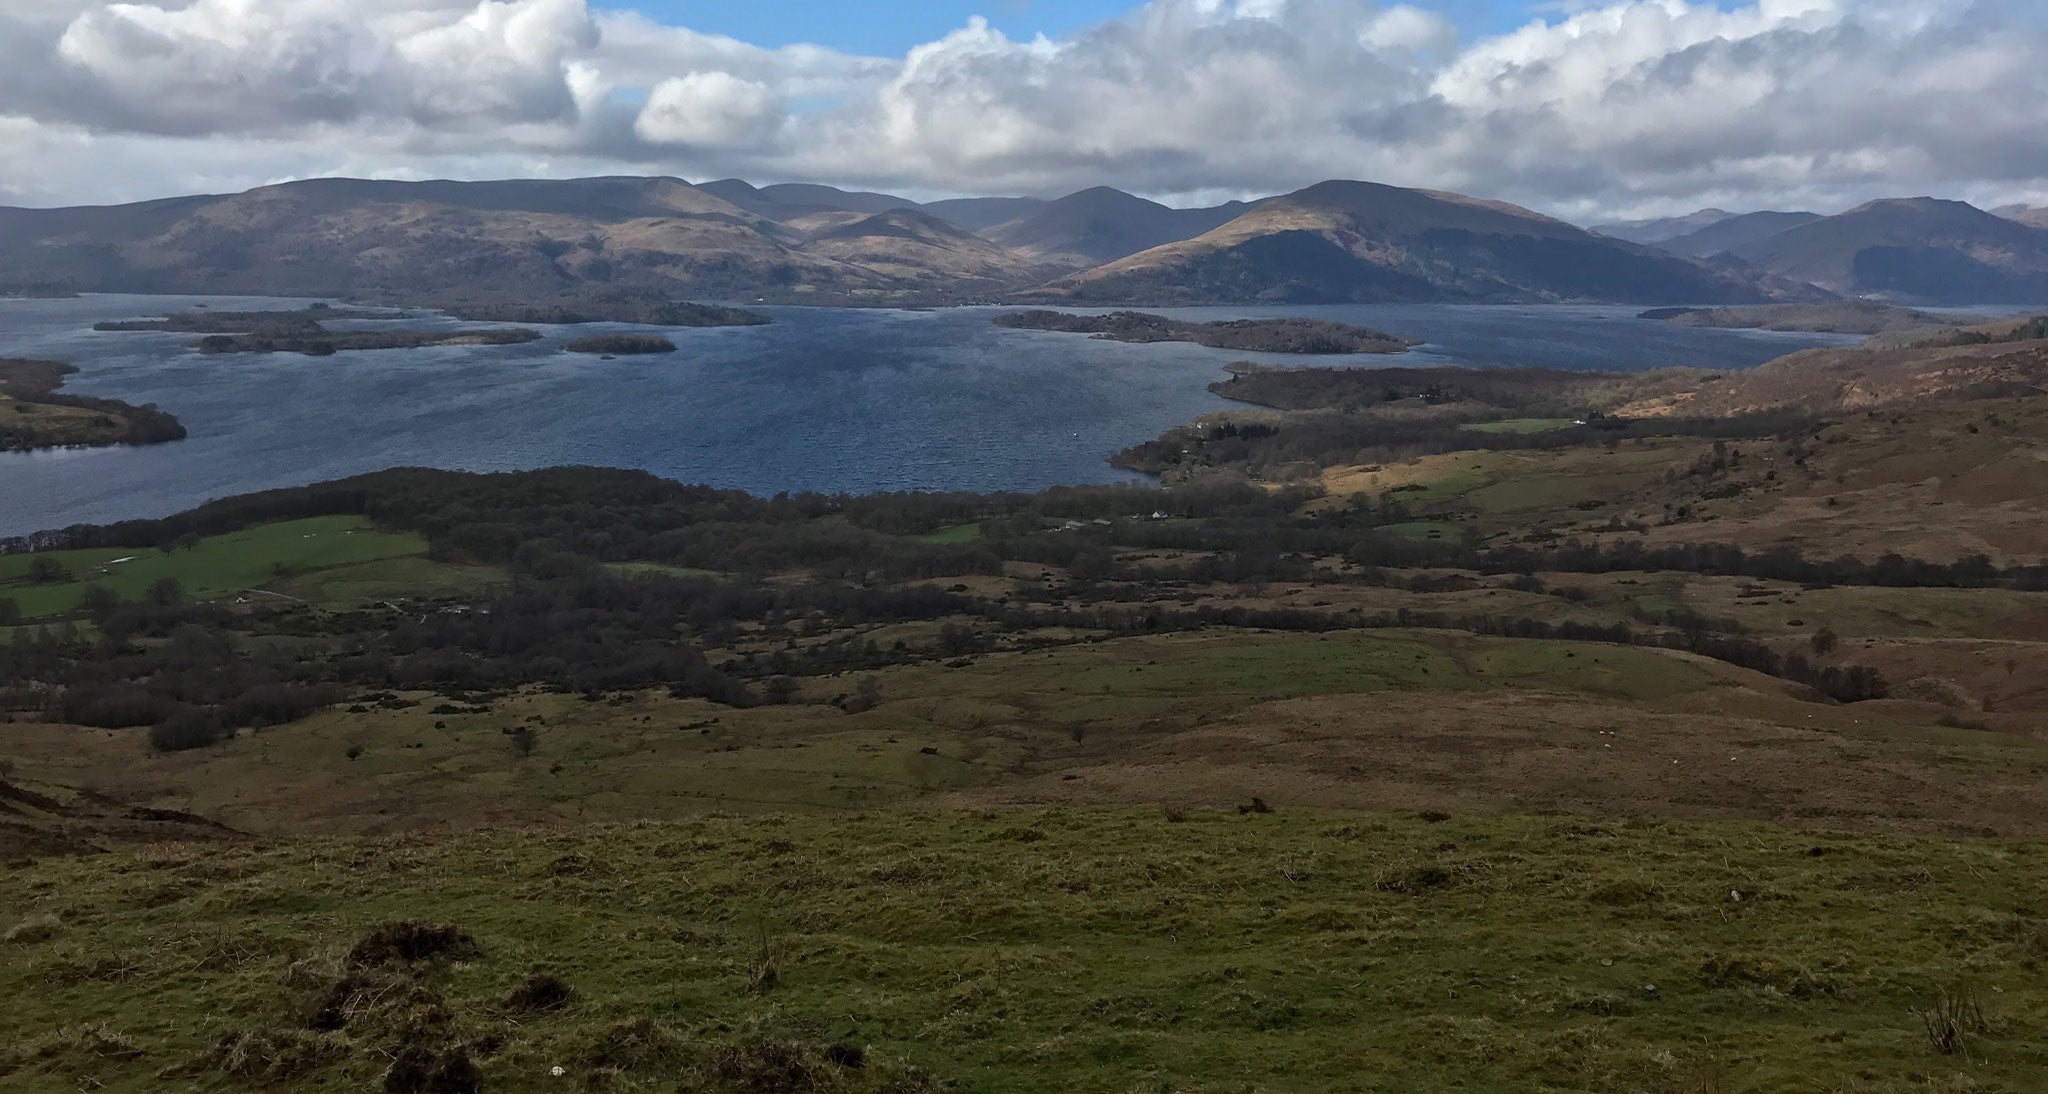 Scenic shot of the Scottish Highlands